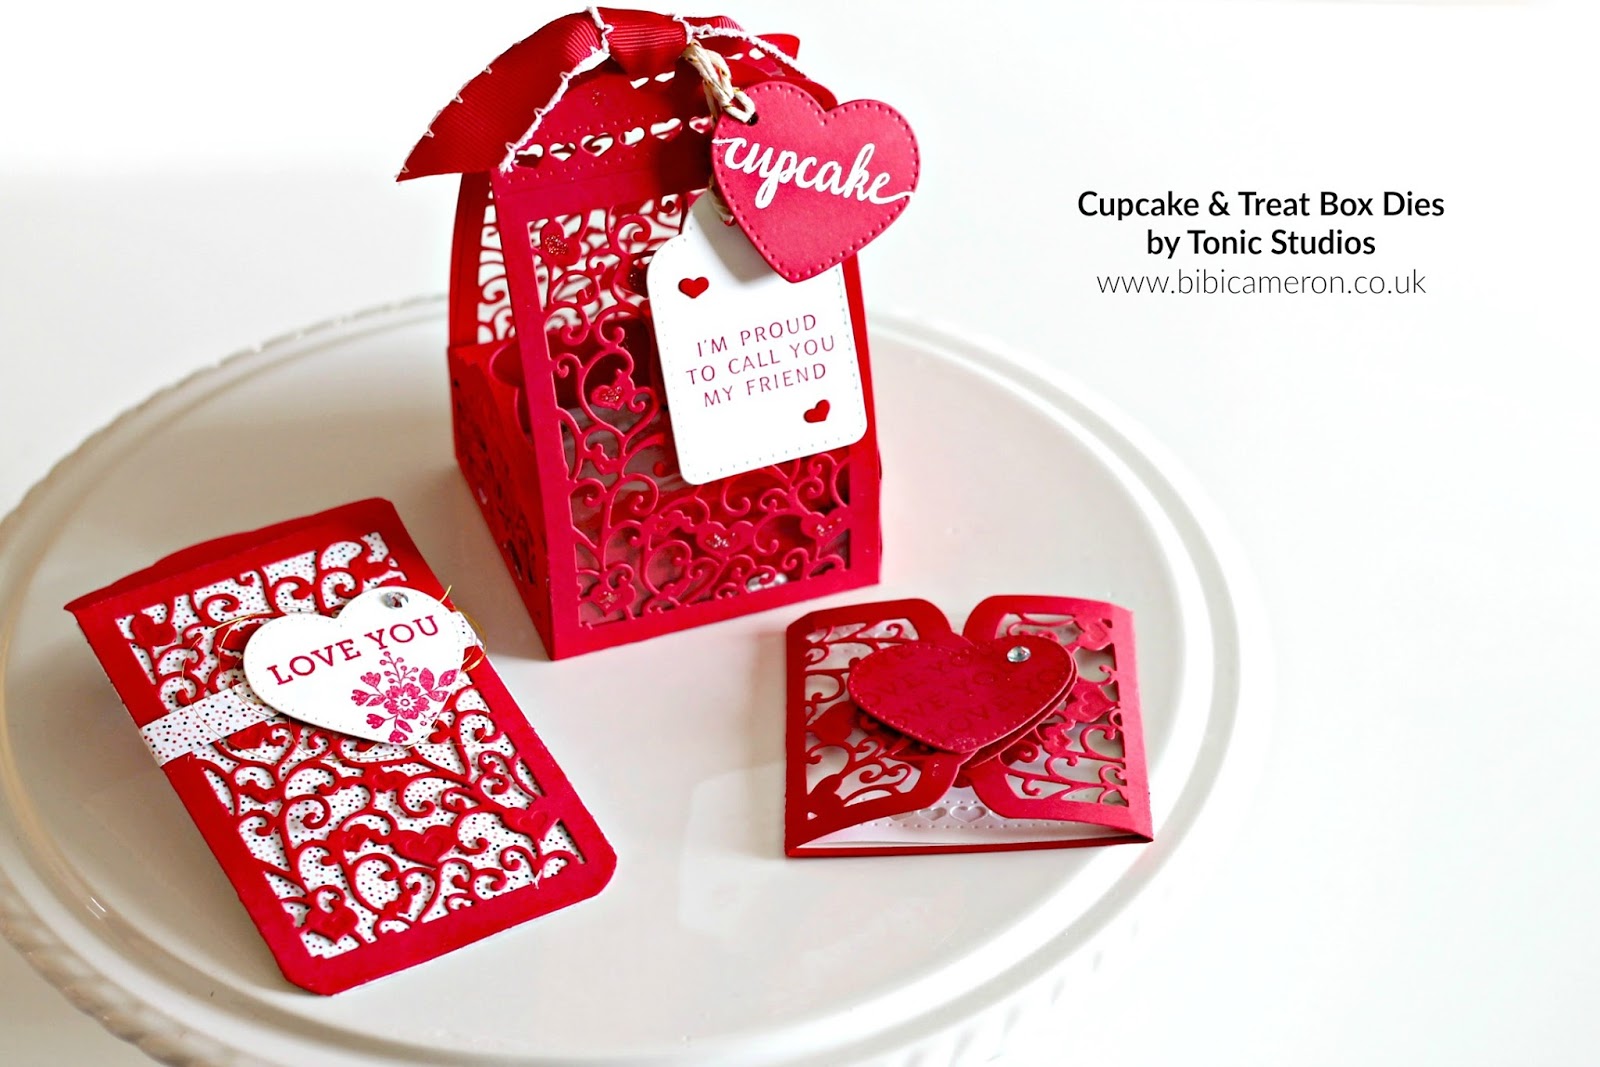 Cupcake & Treat Box by Tonic Studios